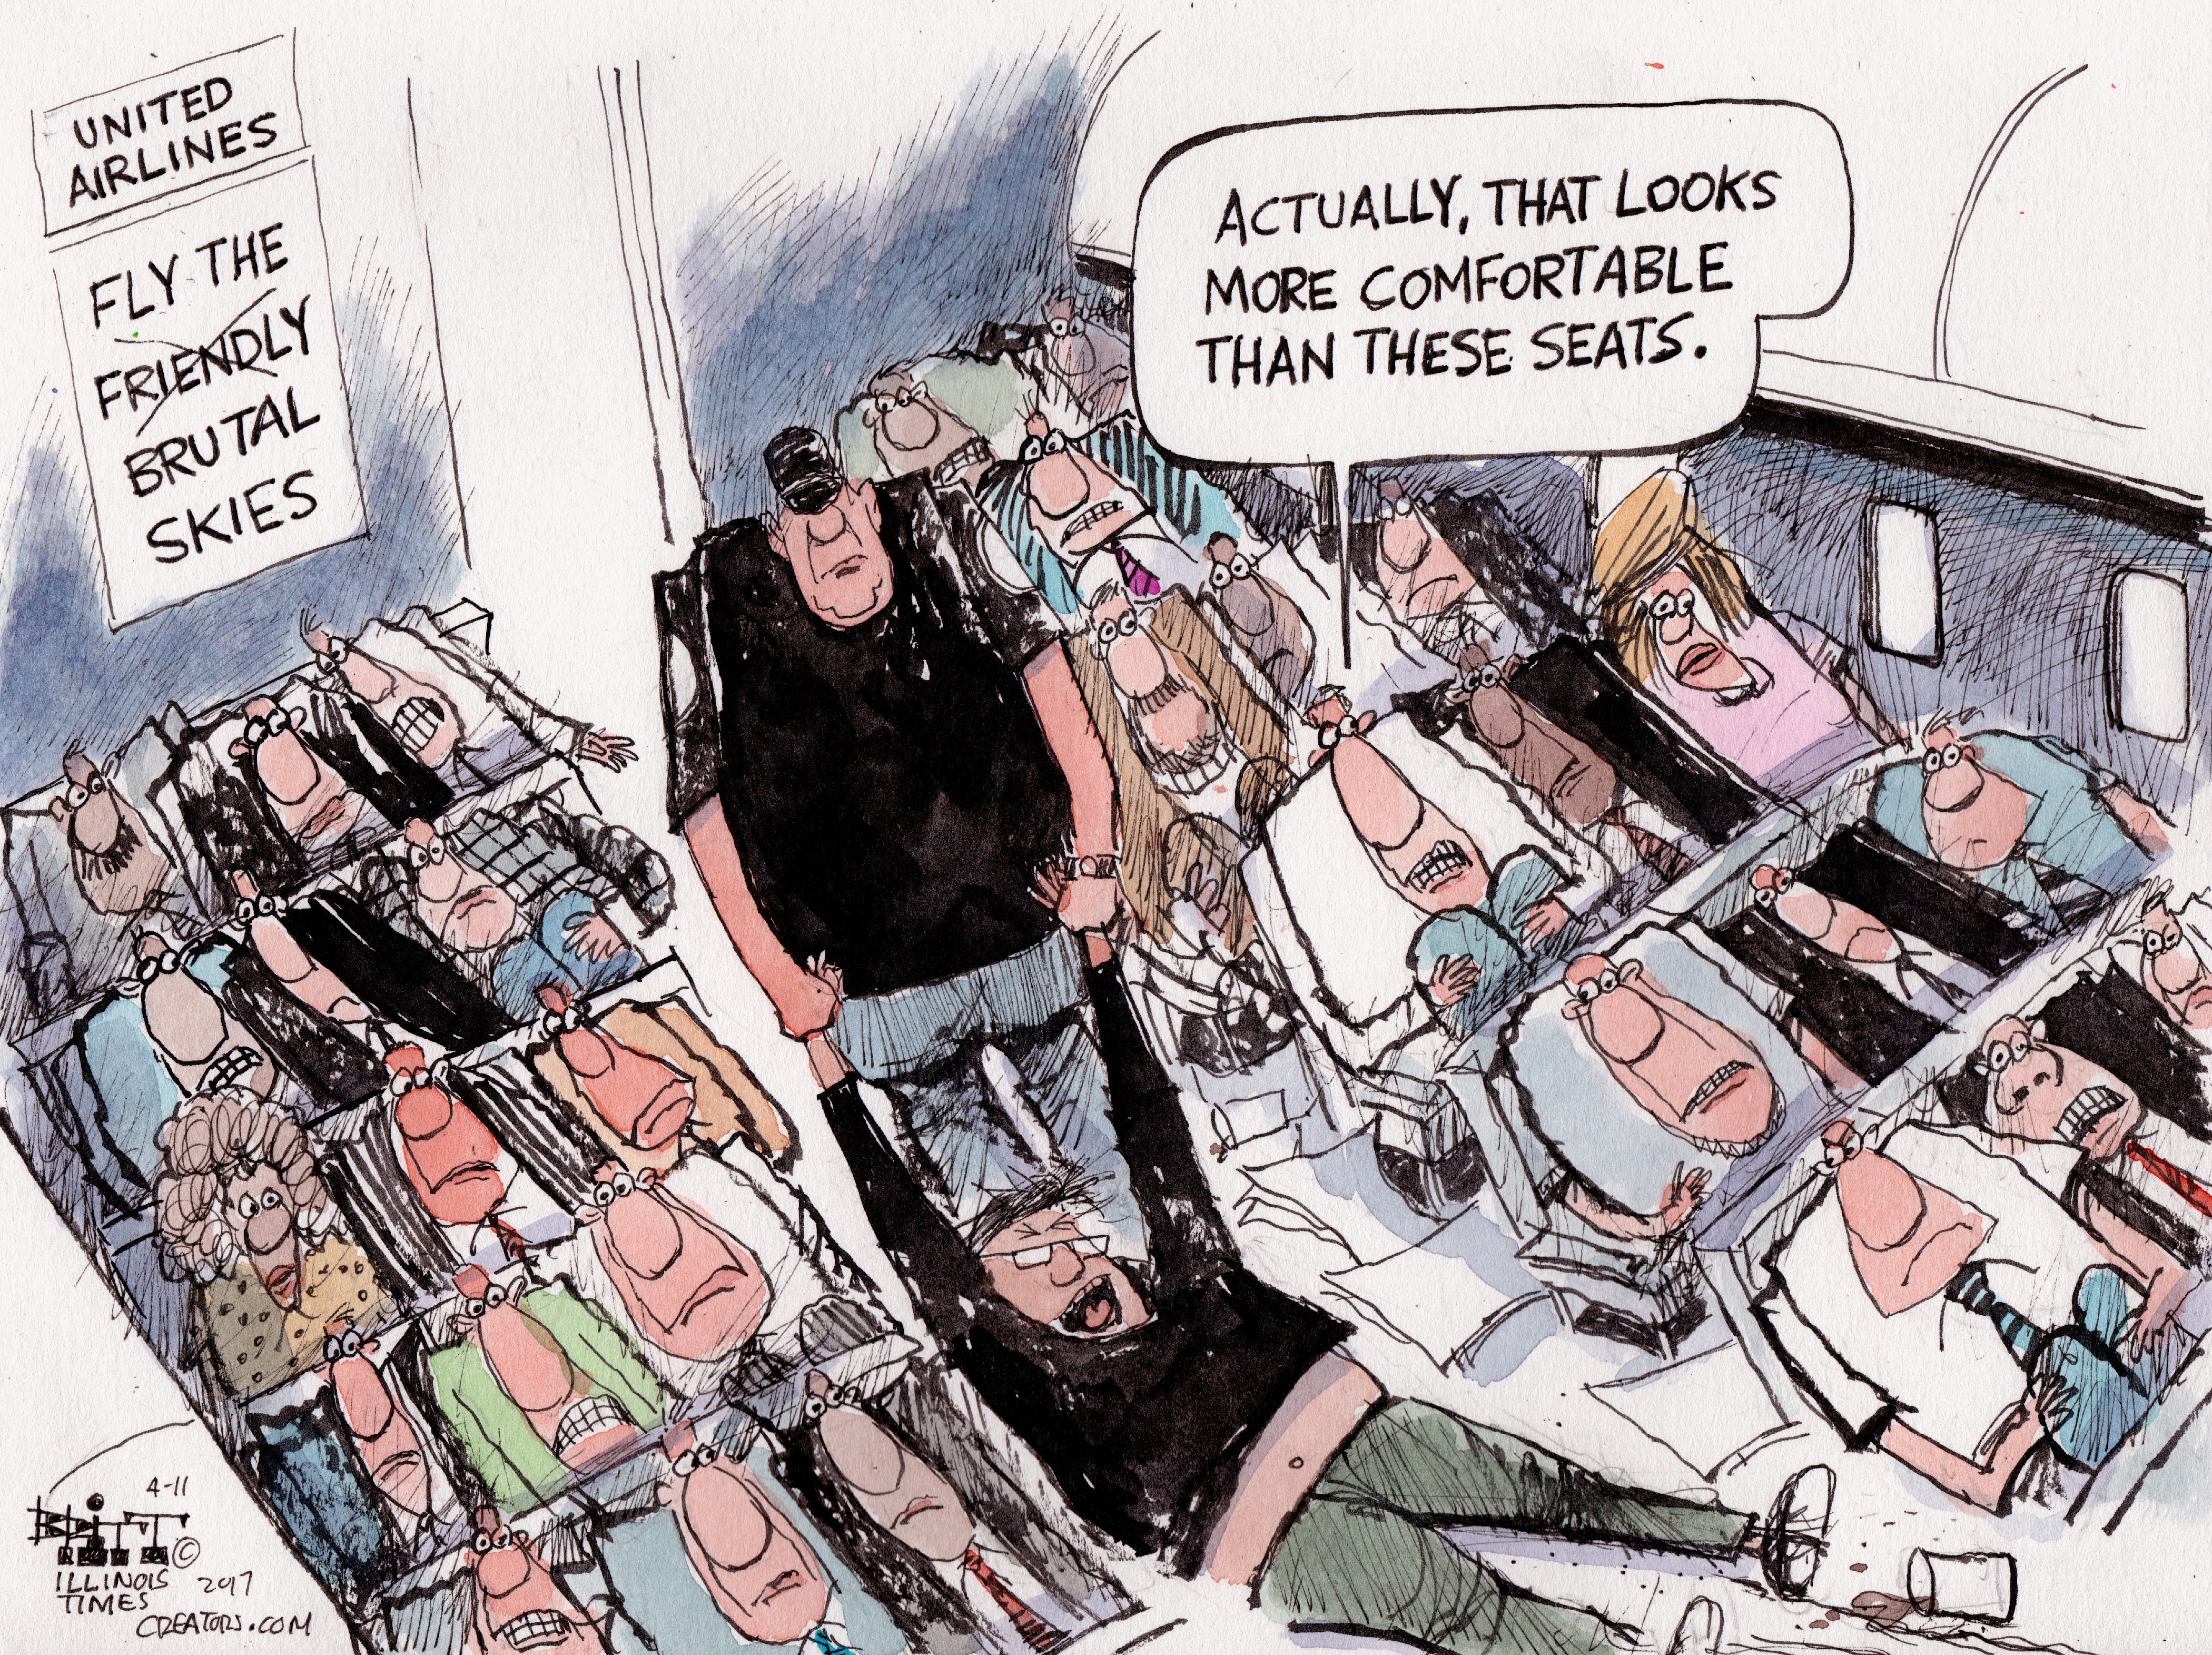 Editorial Cartoon U.S. United Airlines passenger removal leg room